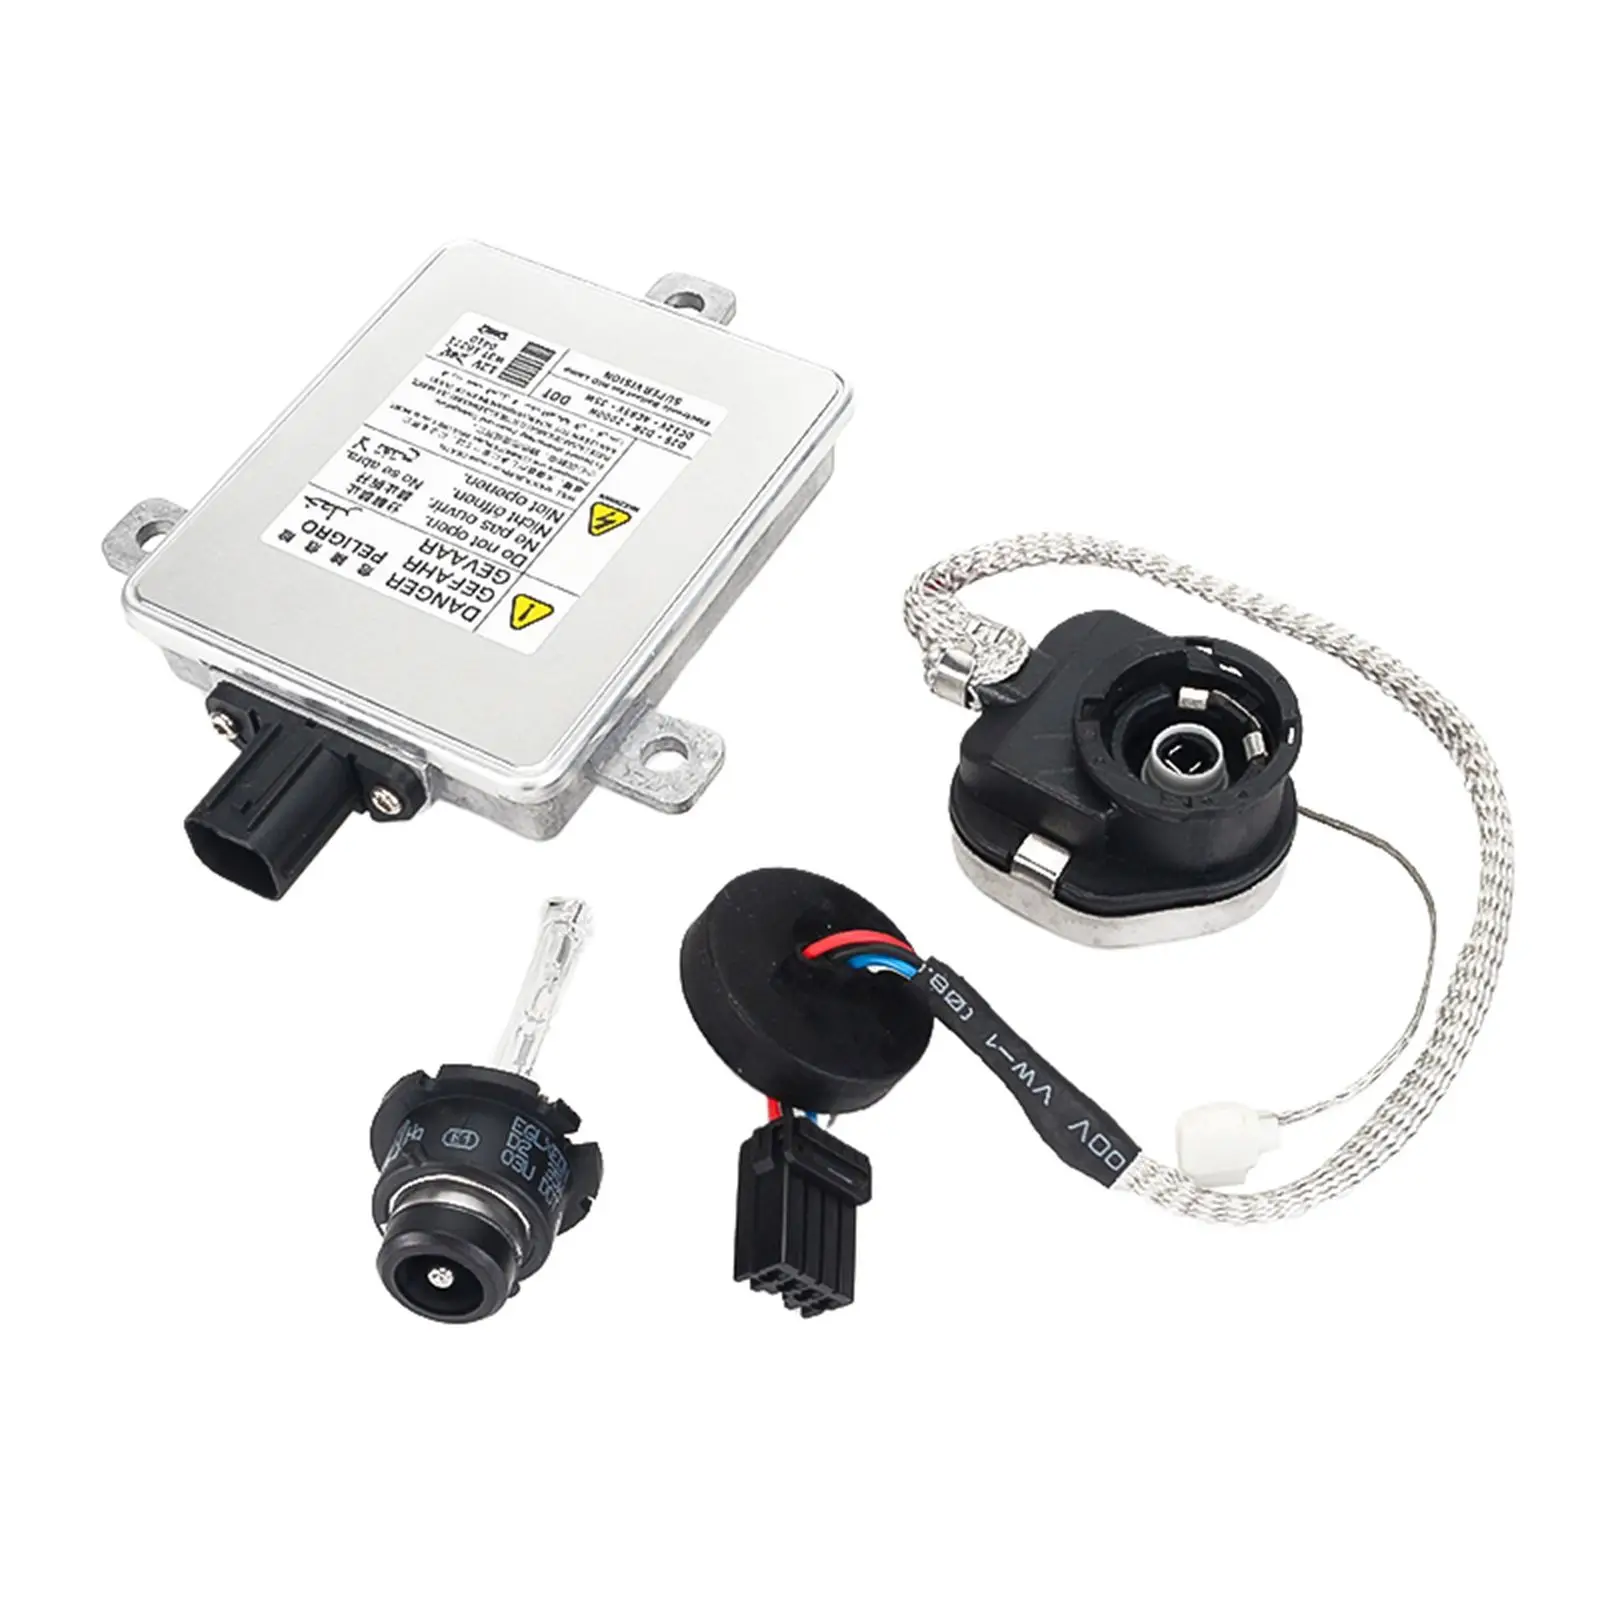 Xenon Headlight Ballast Control Module with Igniter & Bulb Fit for Acura TSX 2007-2014 33119TA0003 Replacement Accessories